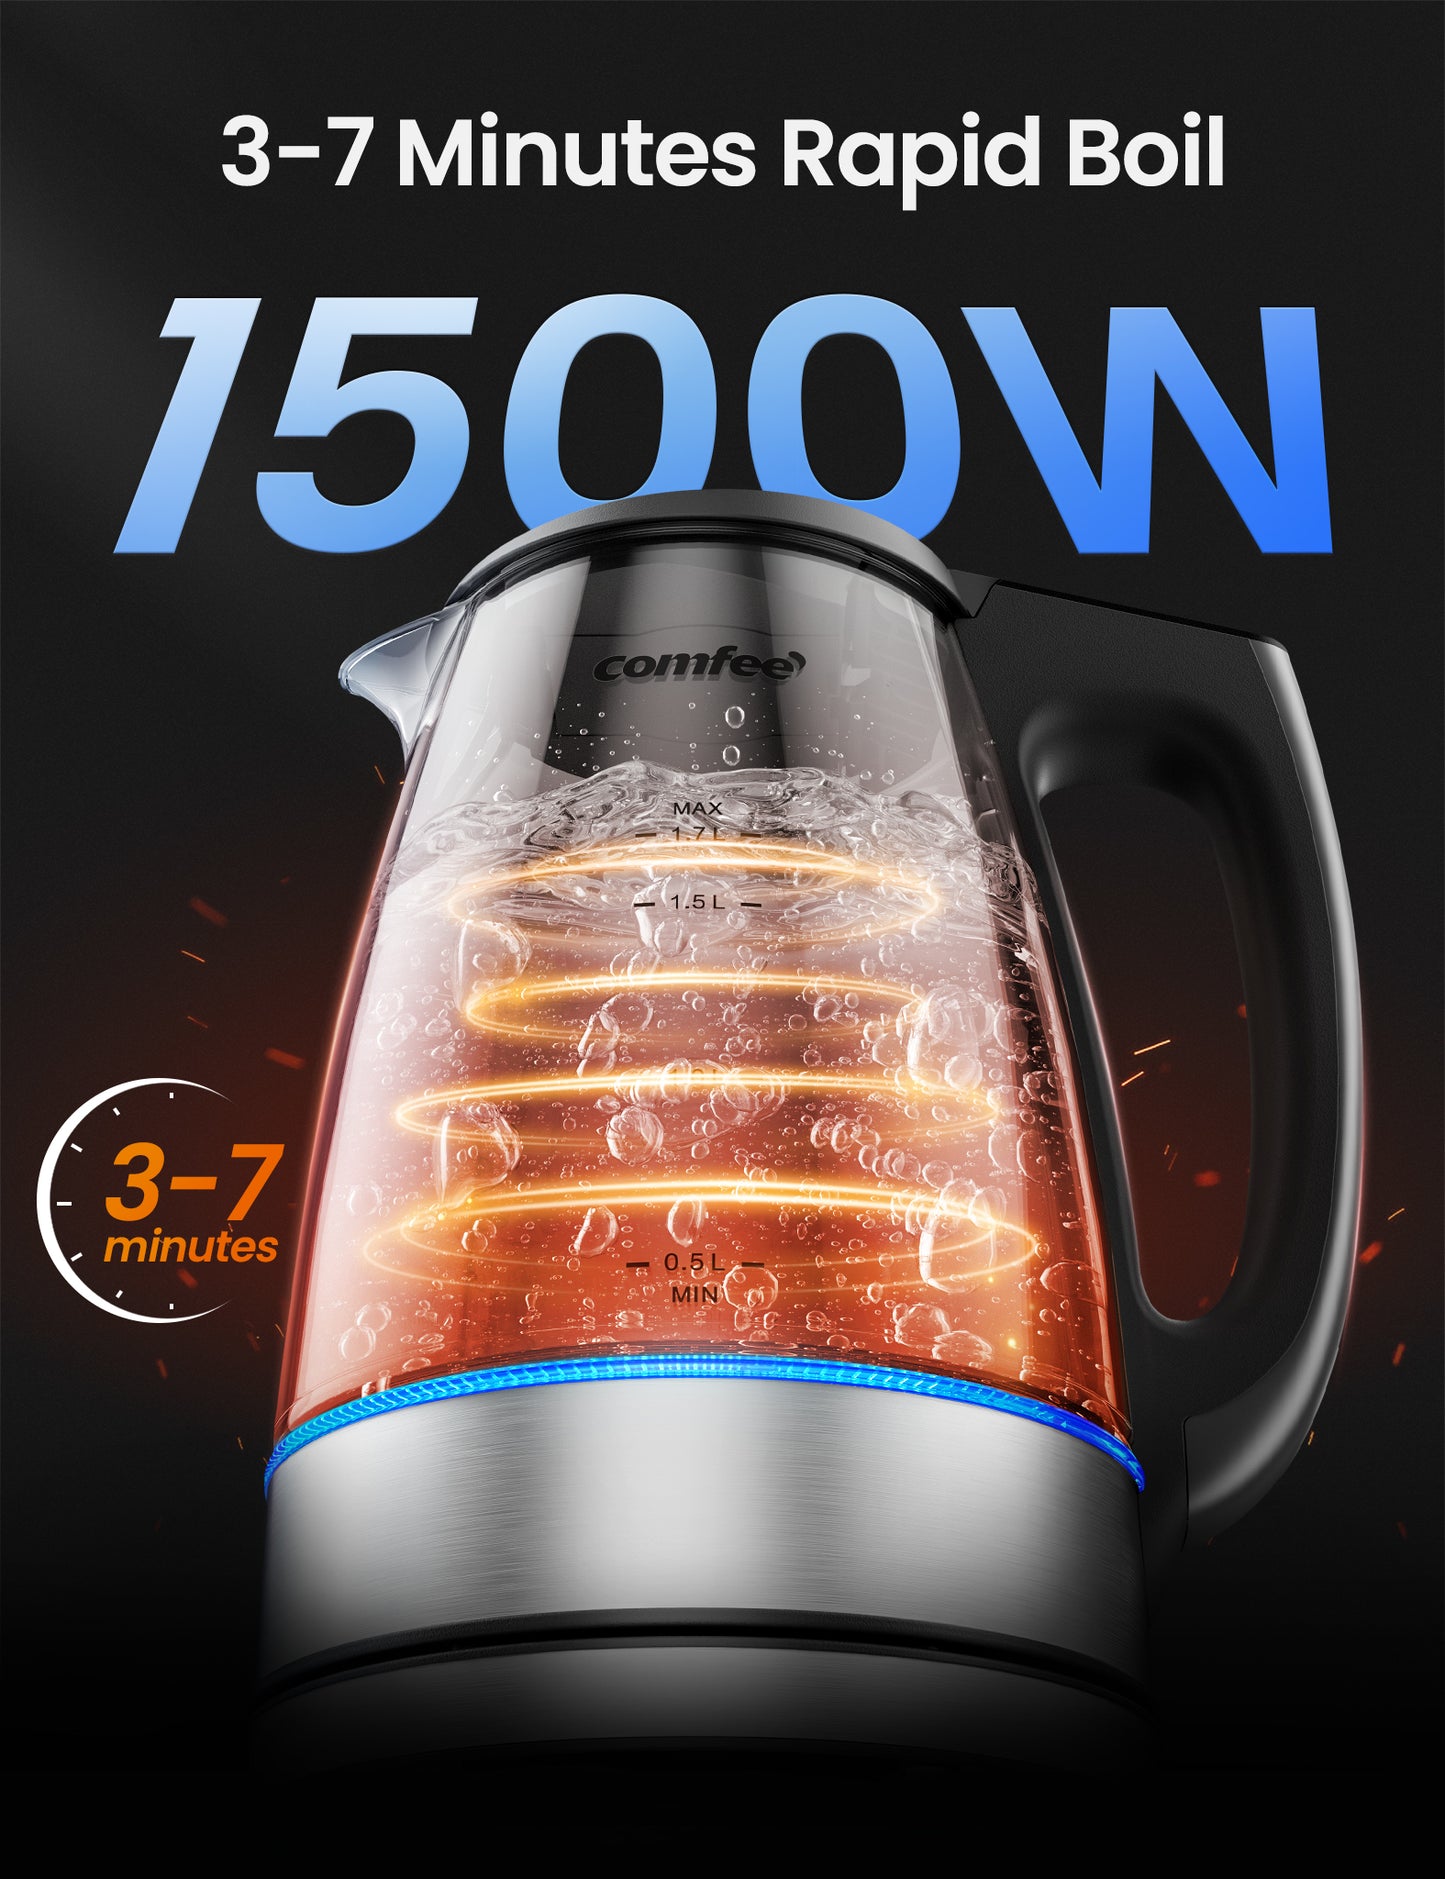 1500w power boils water in 3-7 minutes